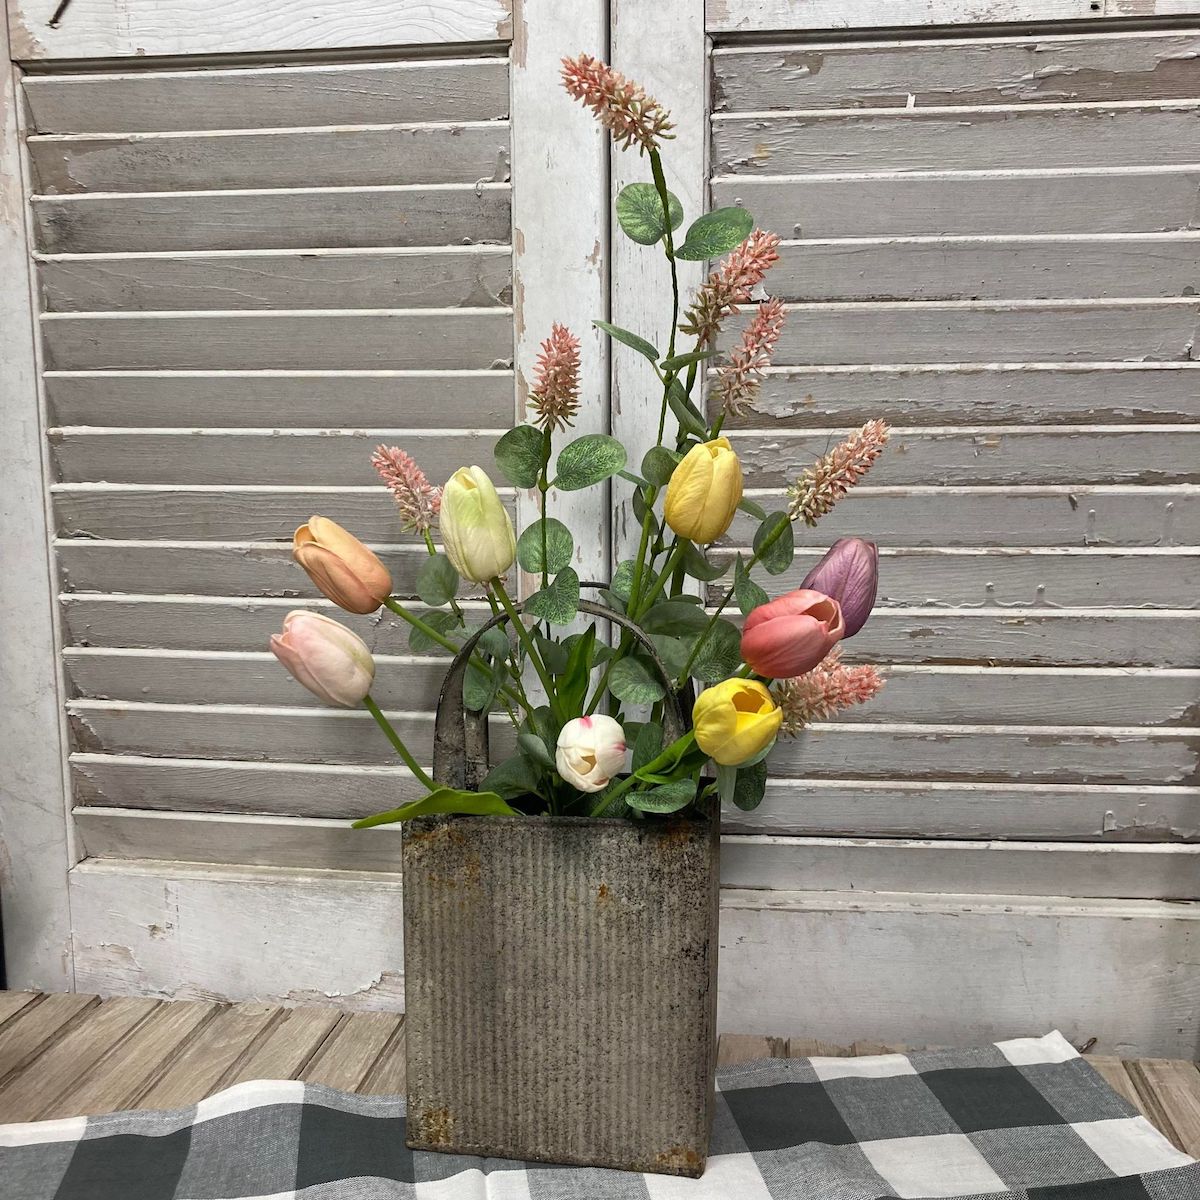 Galvainzed Market Basket with Spring Flowers